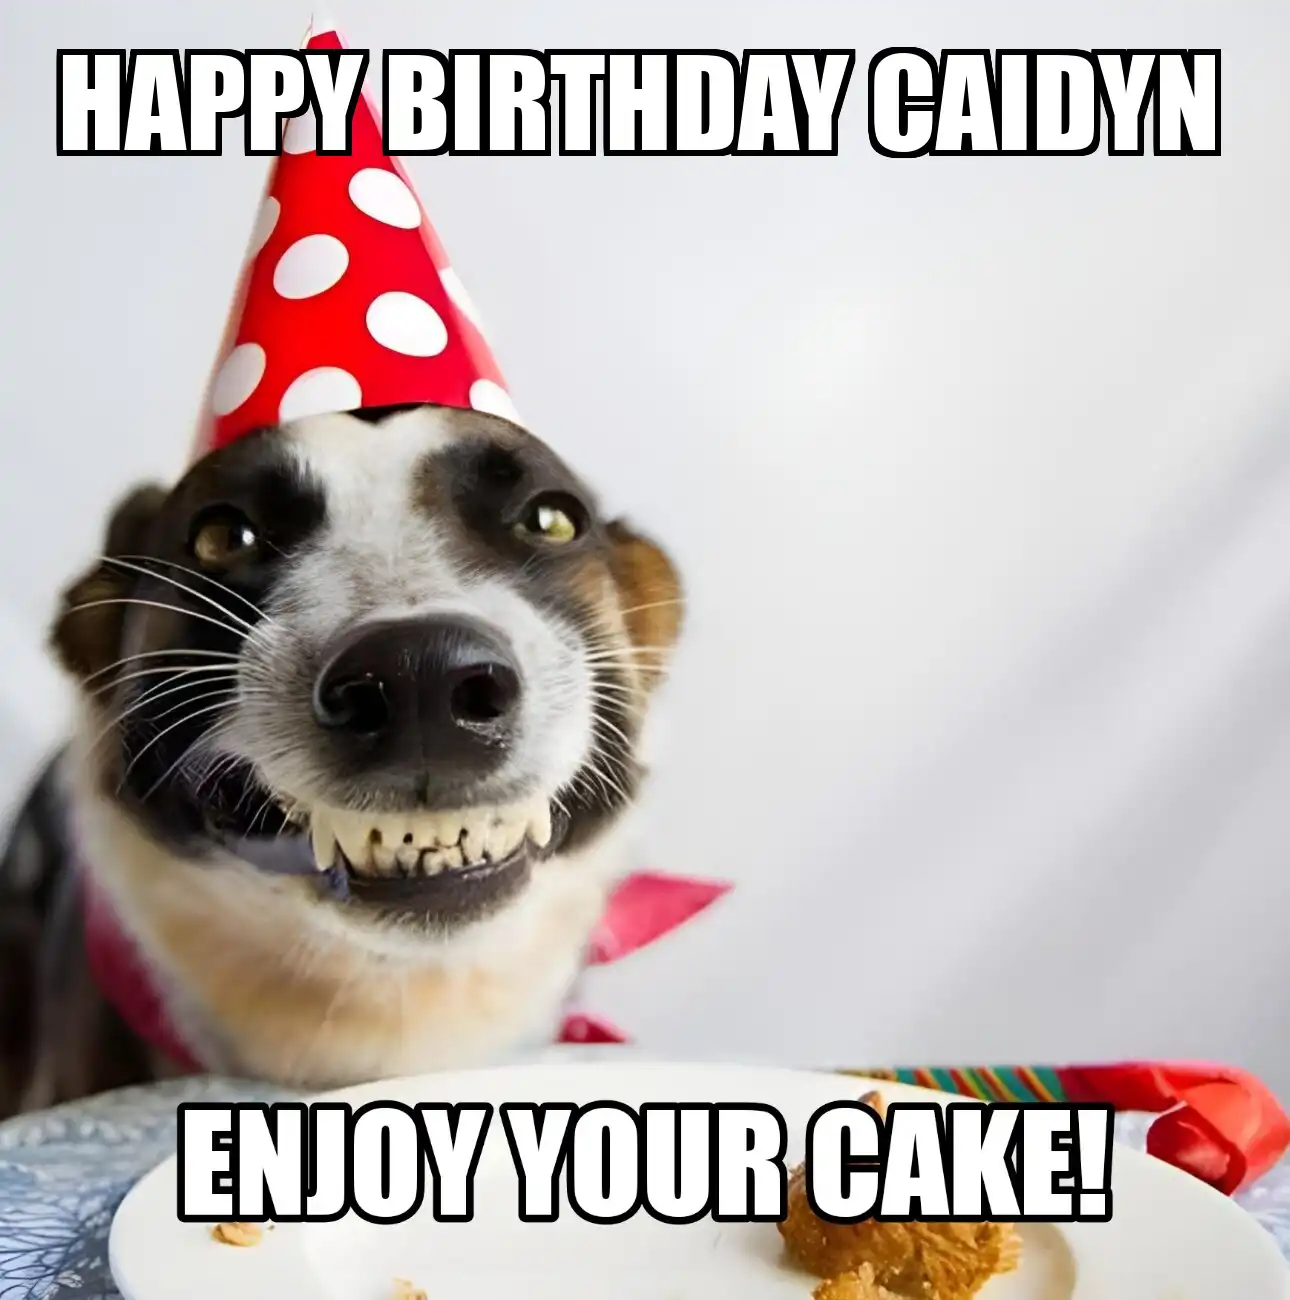 Happy Birthday Caidyn Enjoy Your Cake Dog Meme